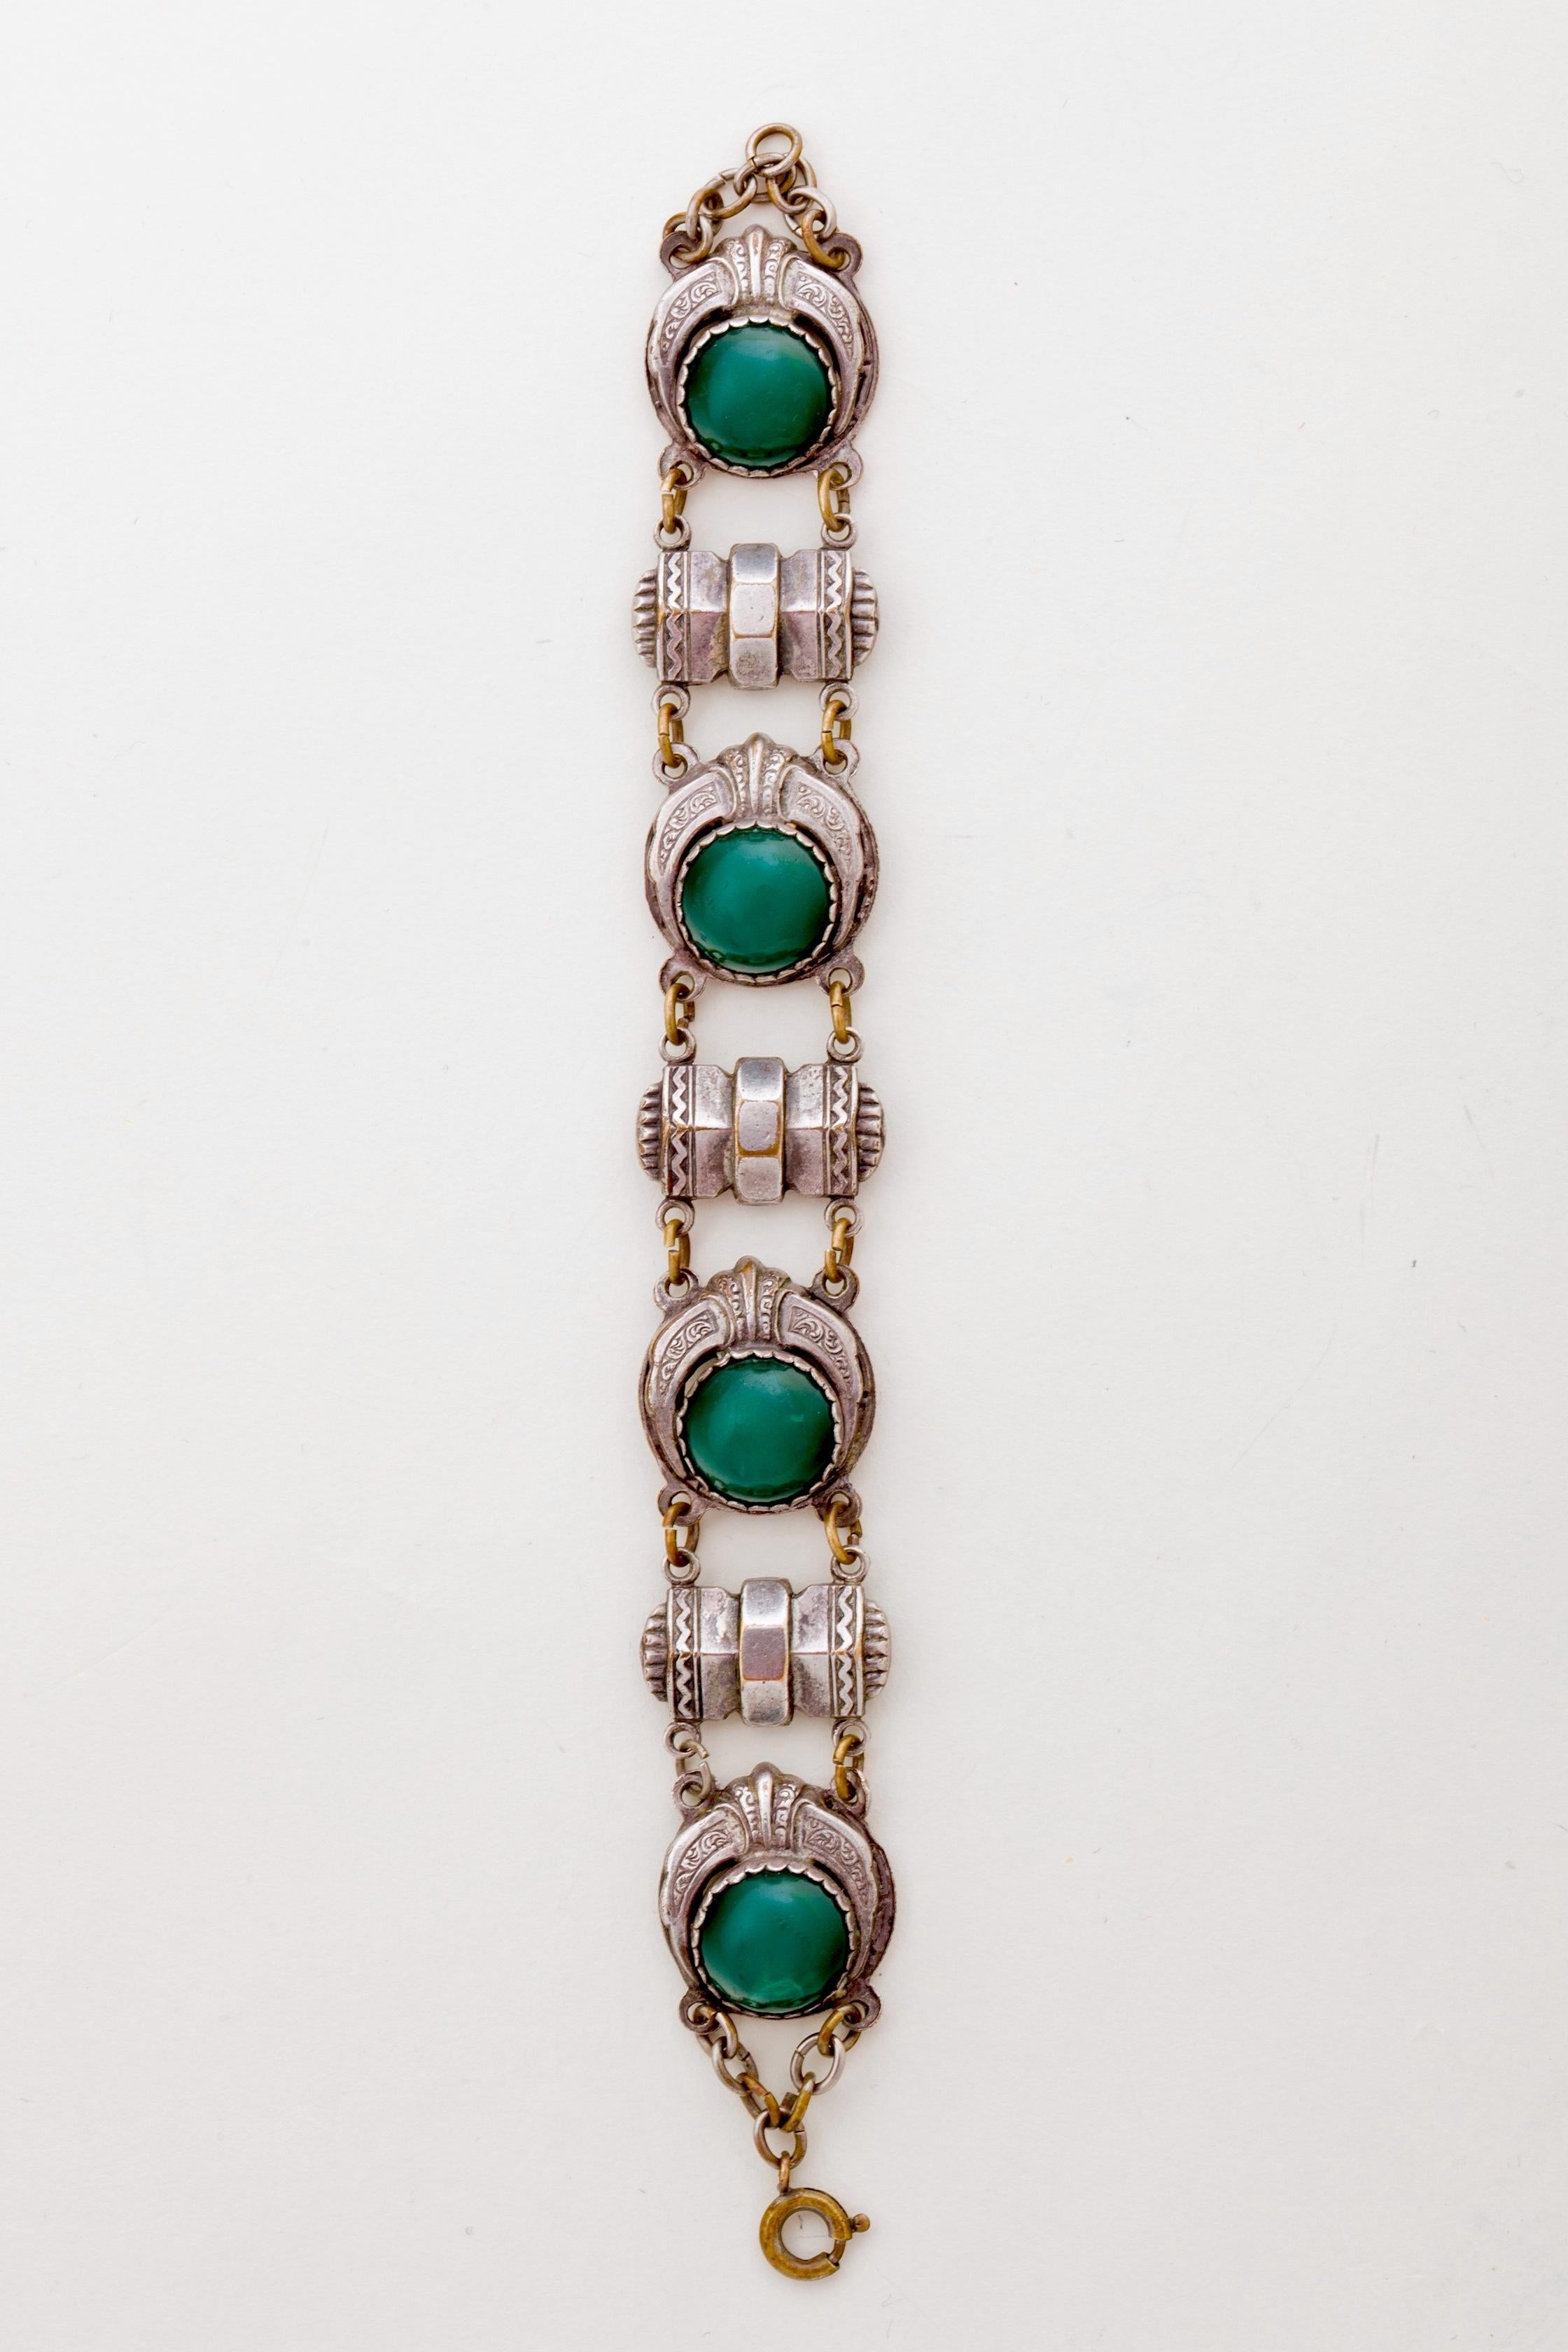 Women's Art Nouveau Silver and Green Cabochon Necklace and Bracelet For Sale